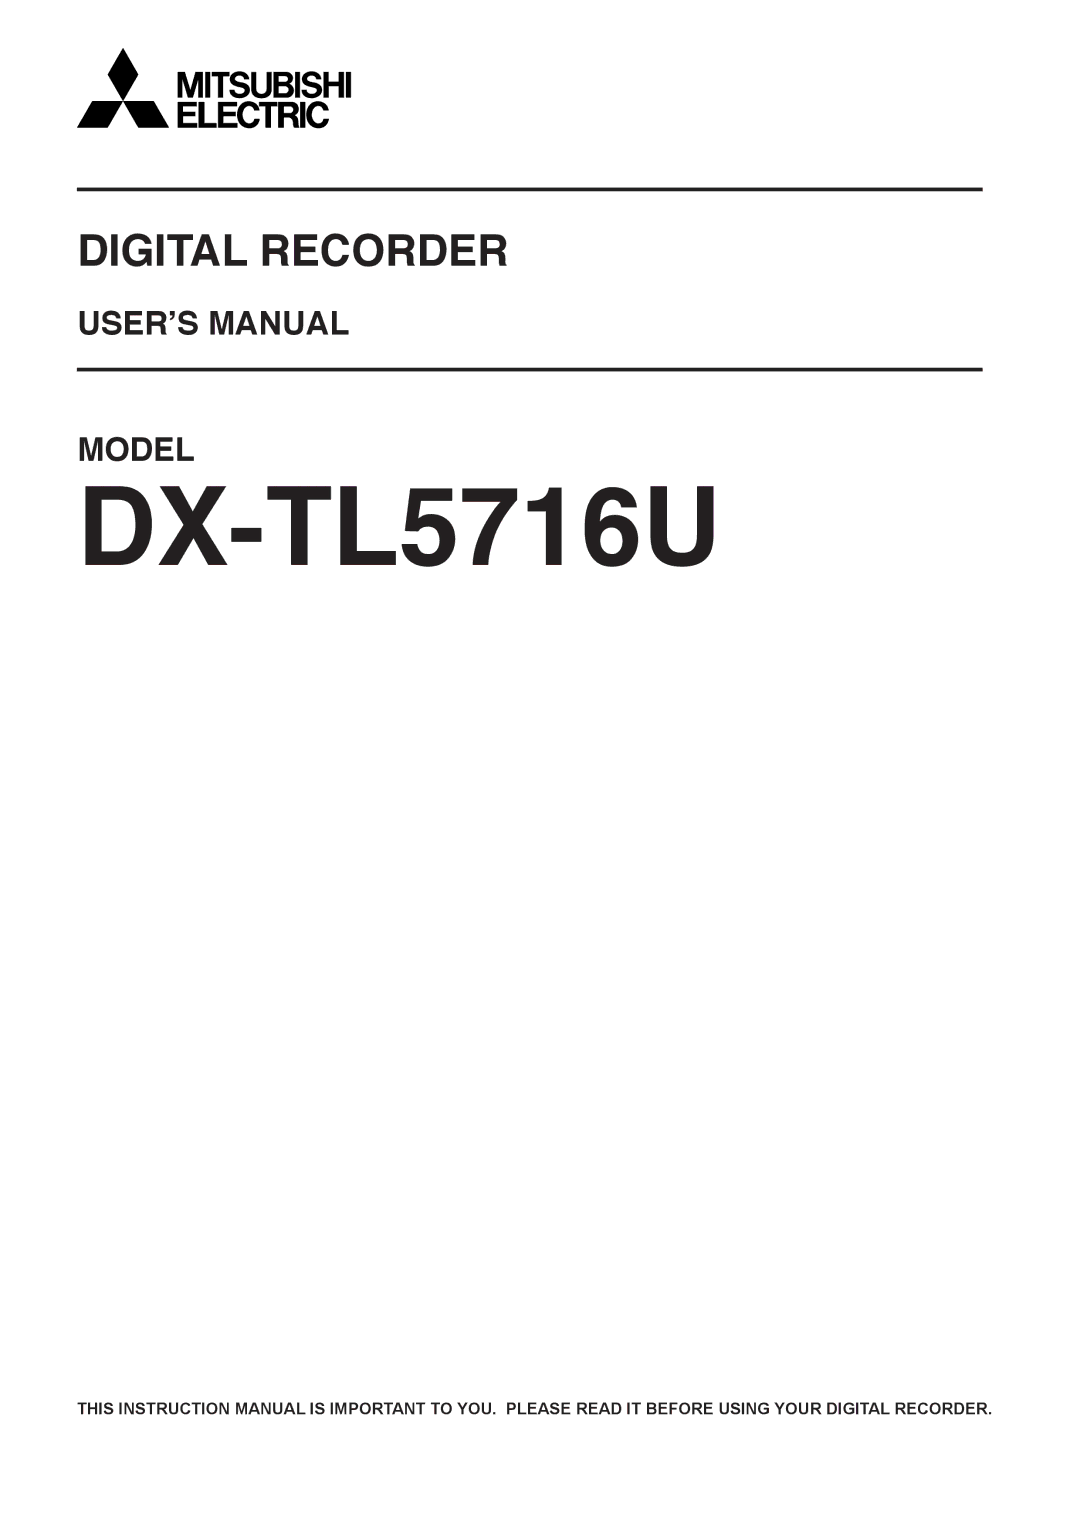 Mitsubishi Electronics DX-TL5716U instruction manual 